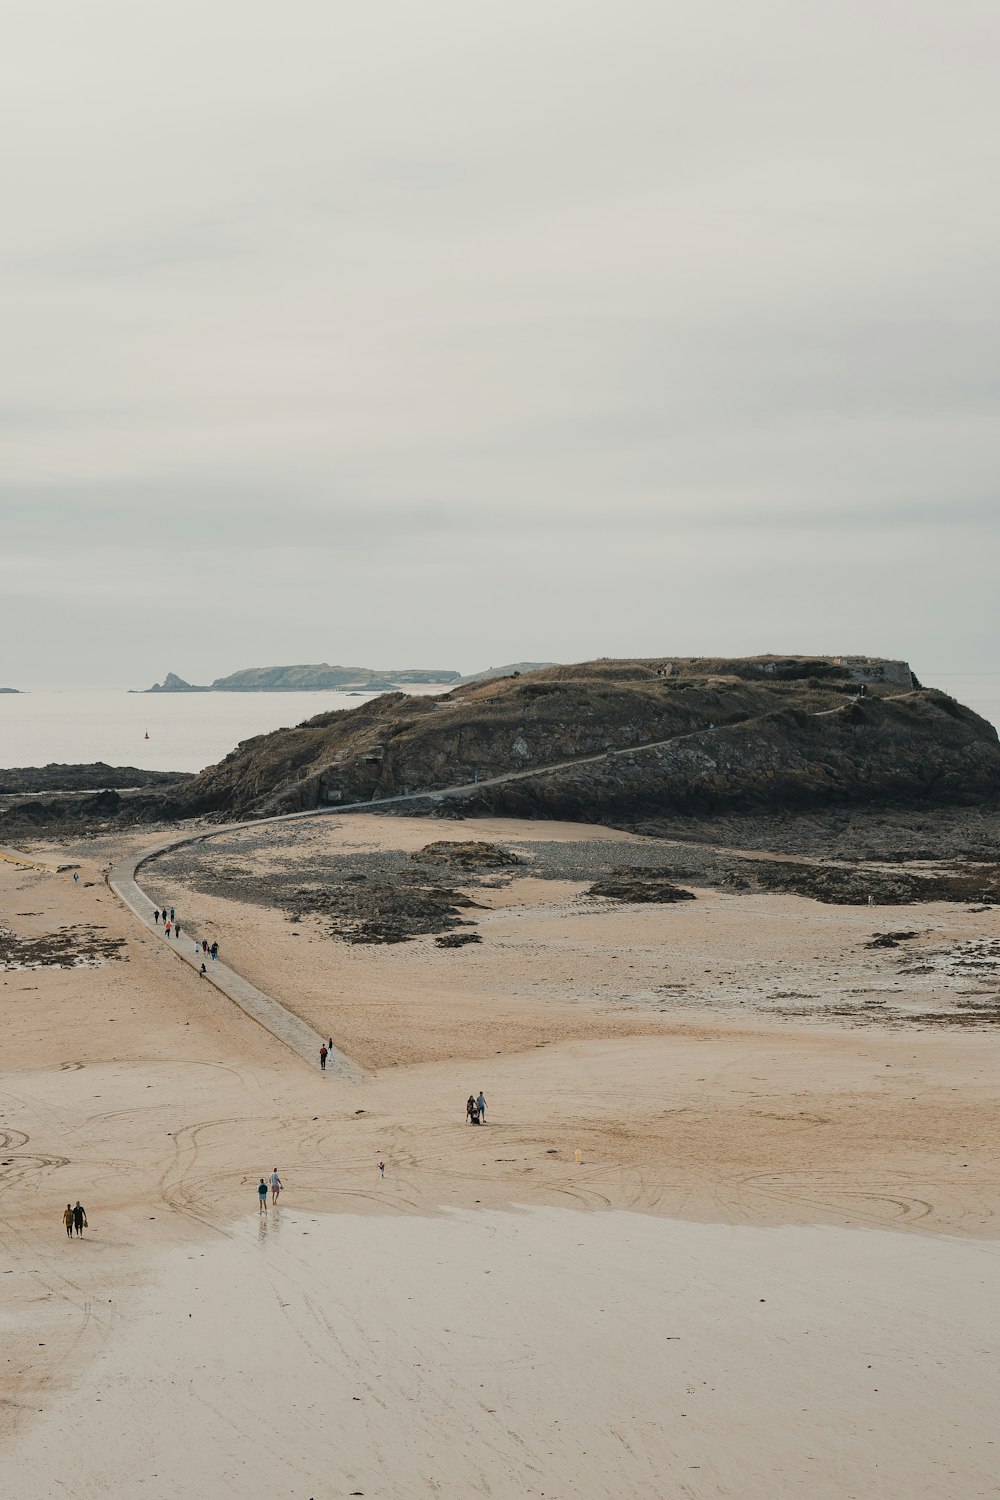 a group of people walking across a sandy beach